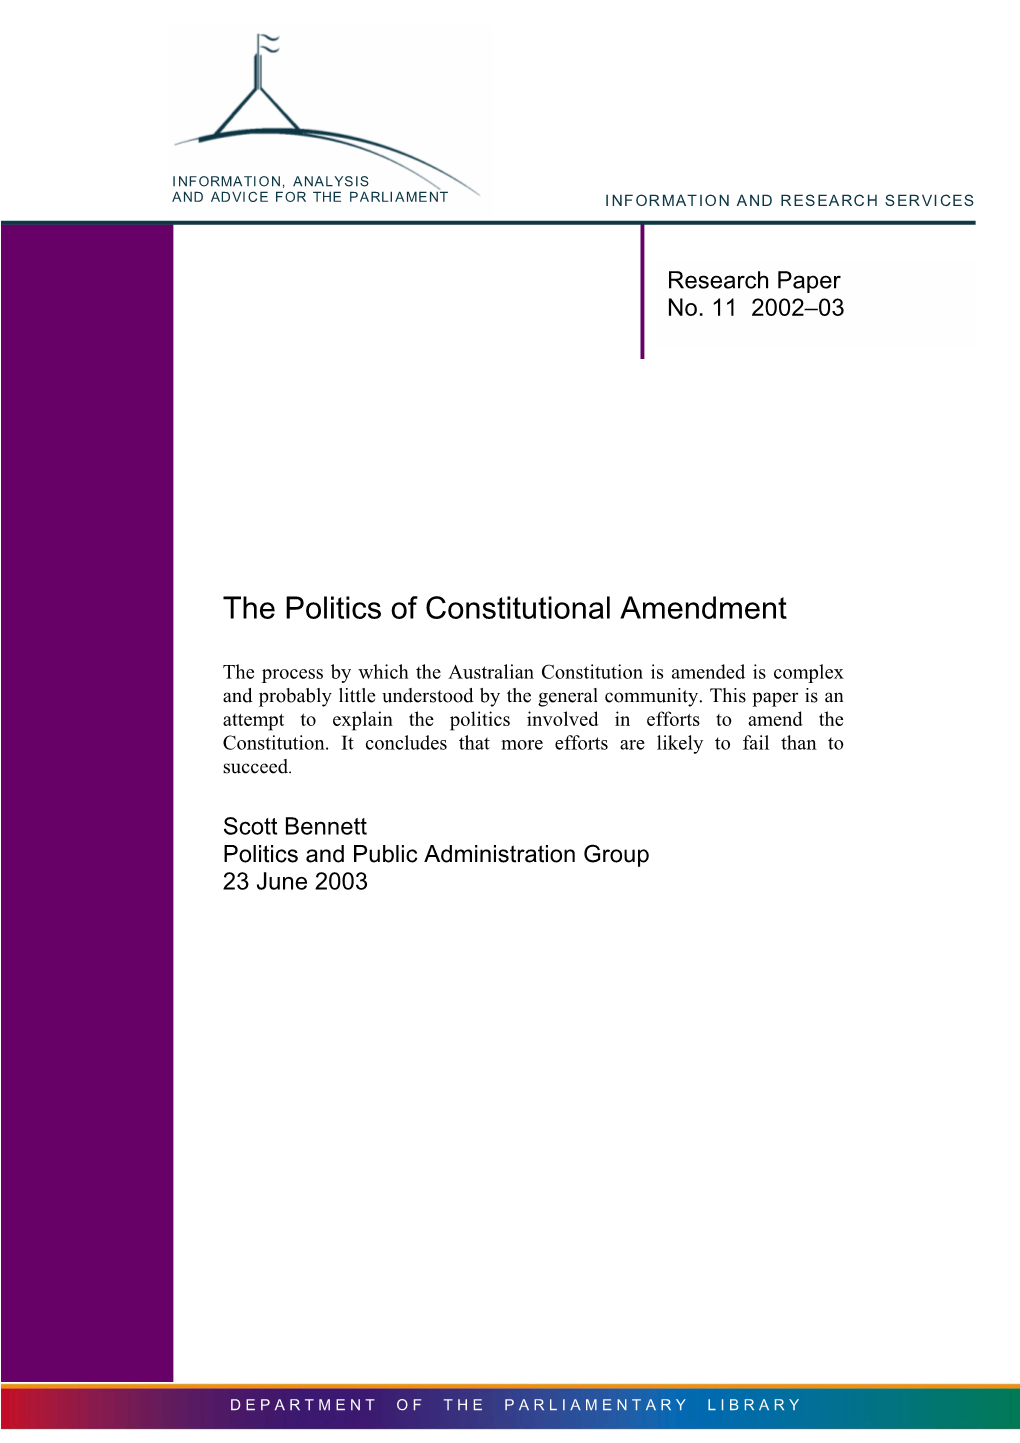 The Politics of Constitutional Amendment